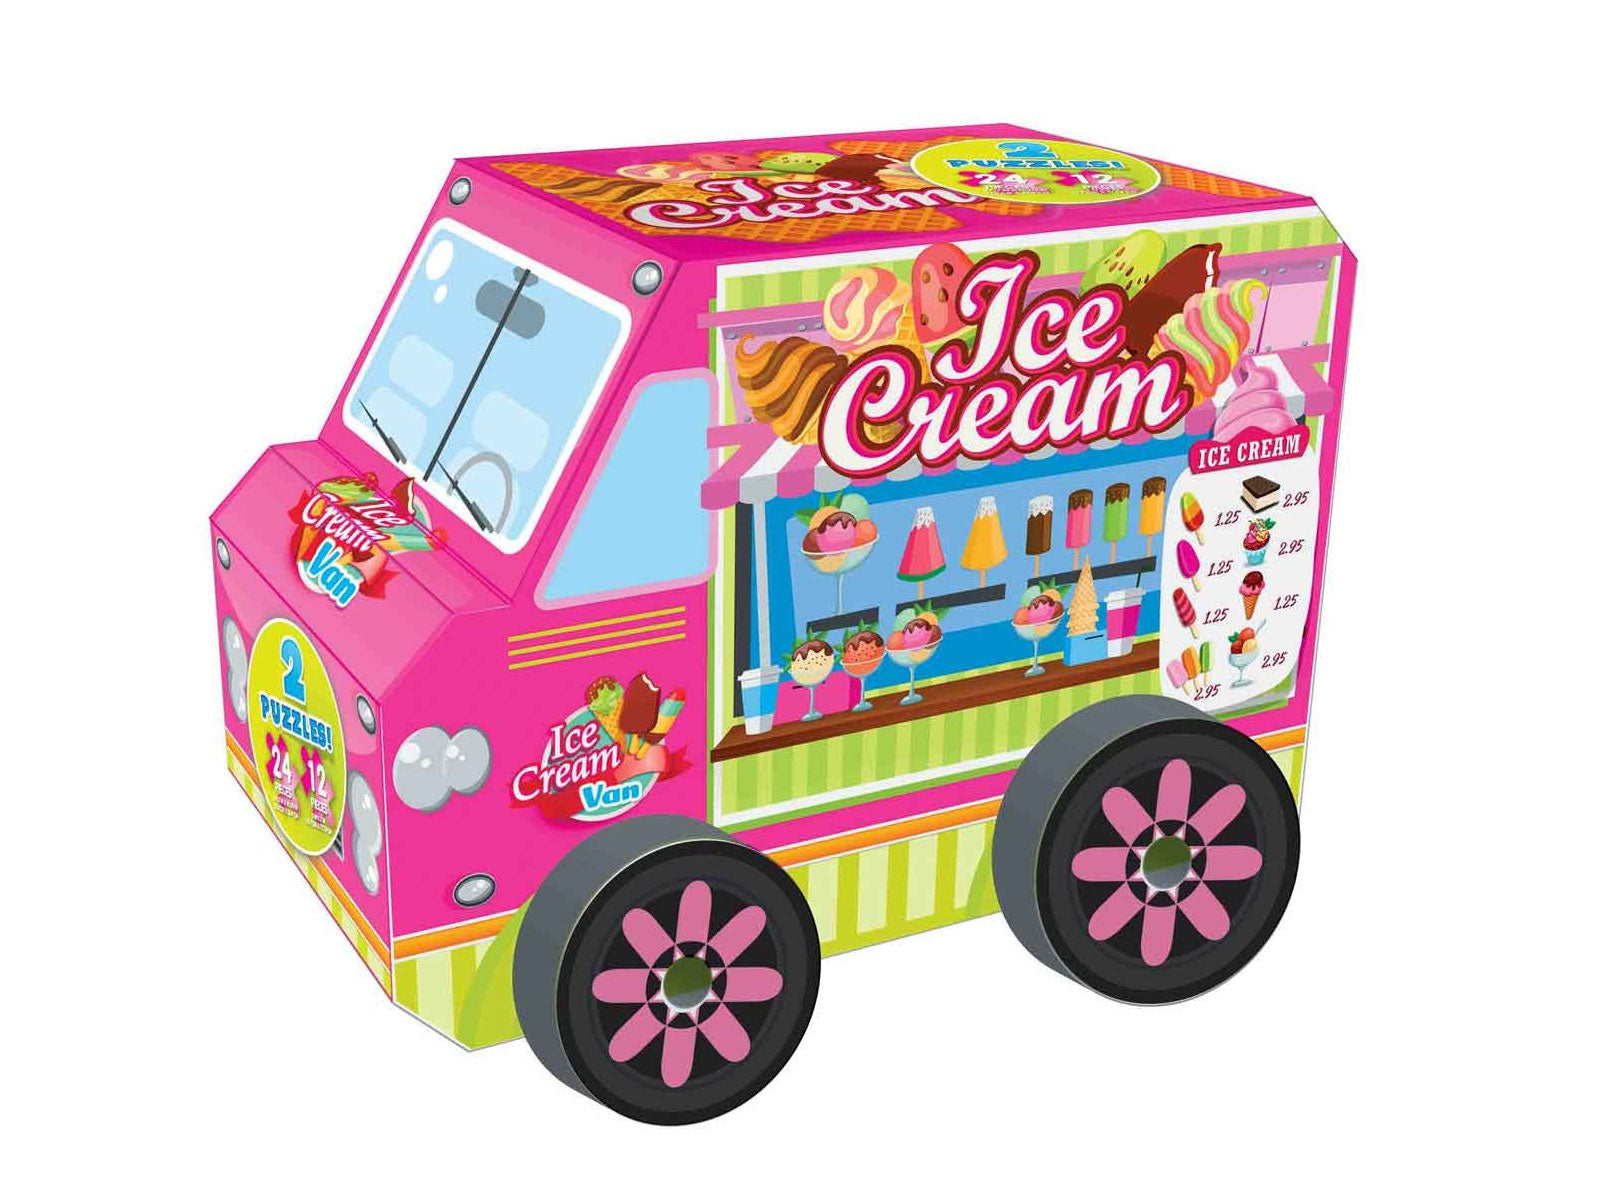 kids ice cream van